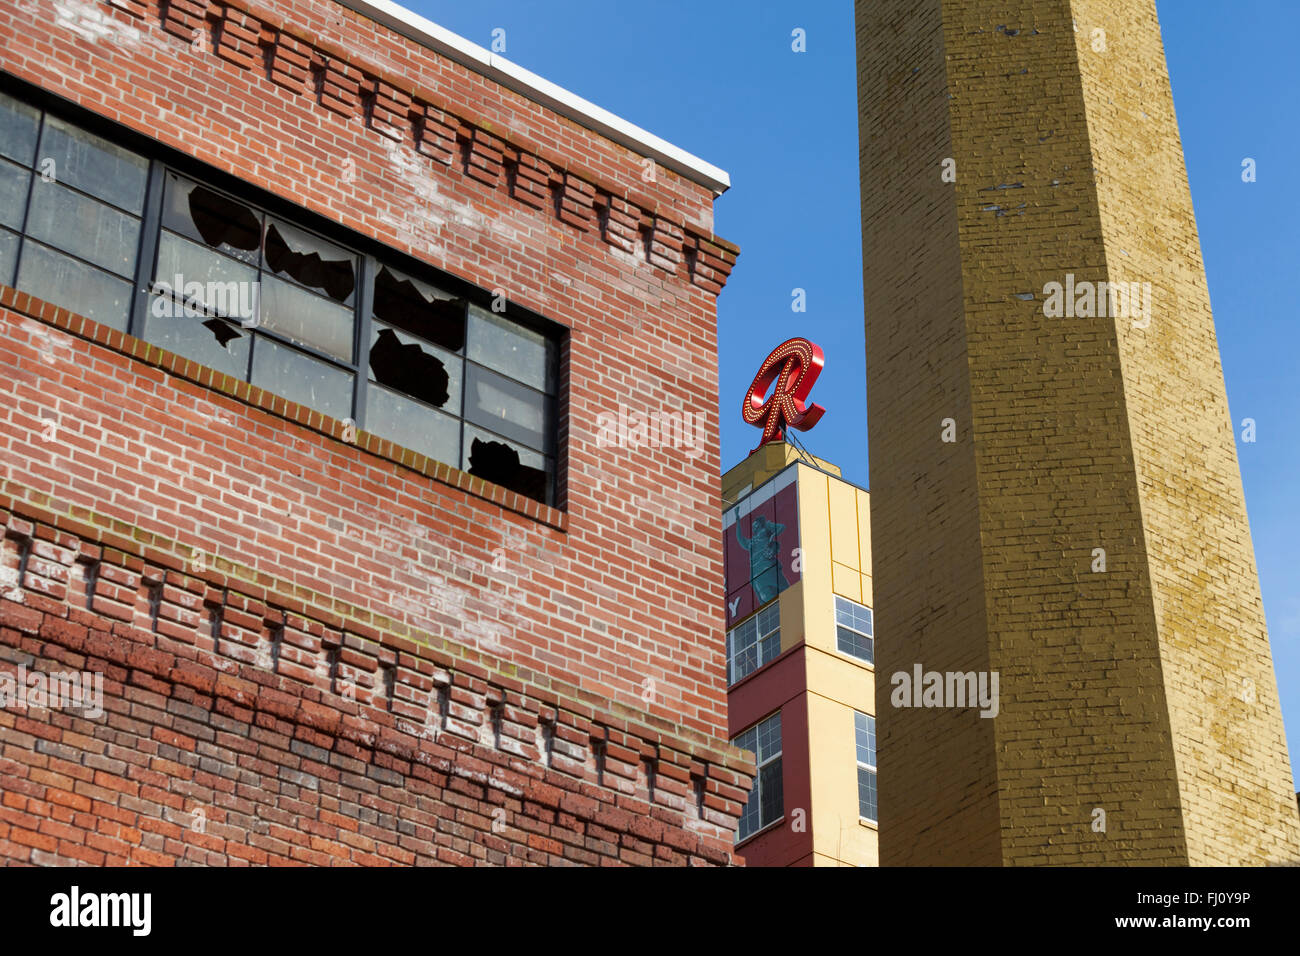 Seattle, Washington: Die alte Brauerei Rainier. Stockfoto